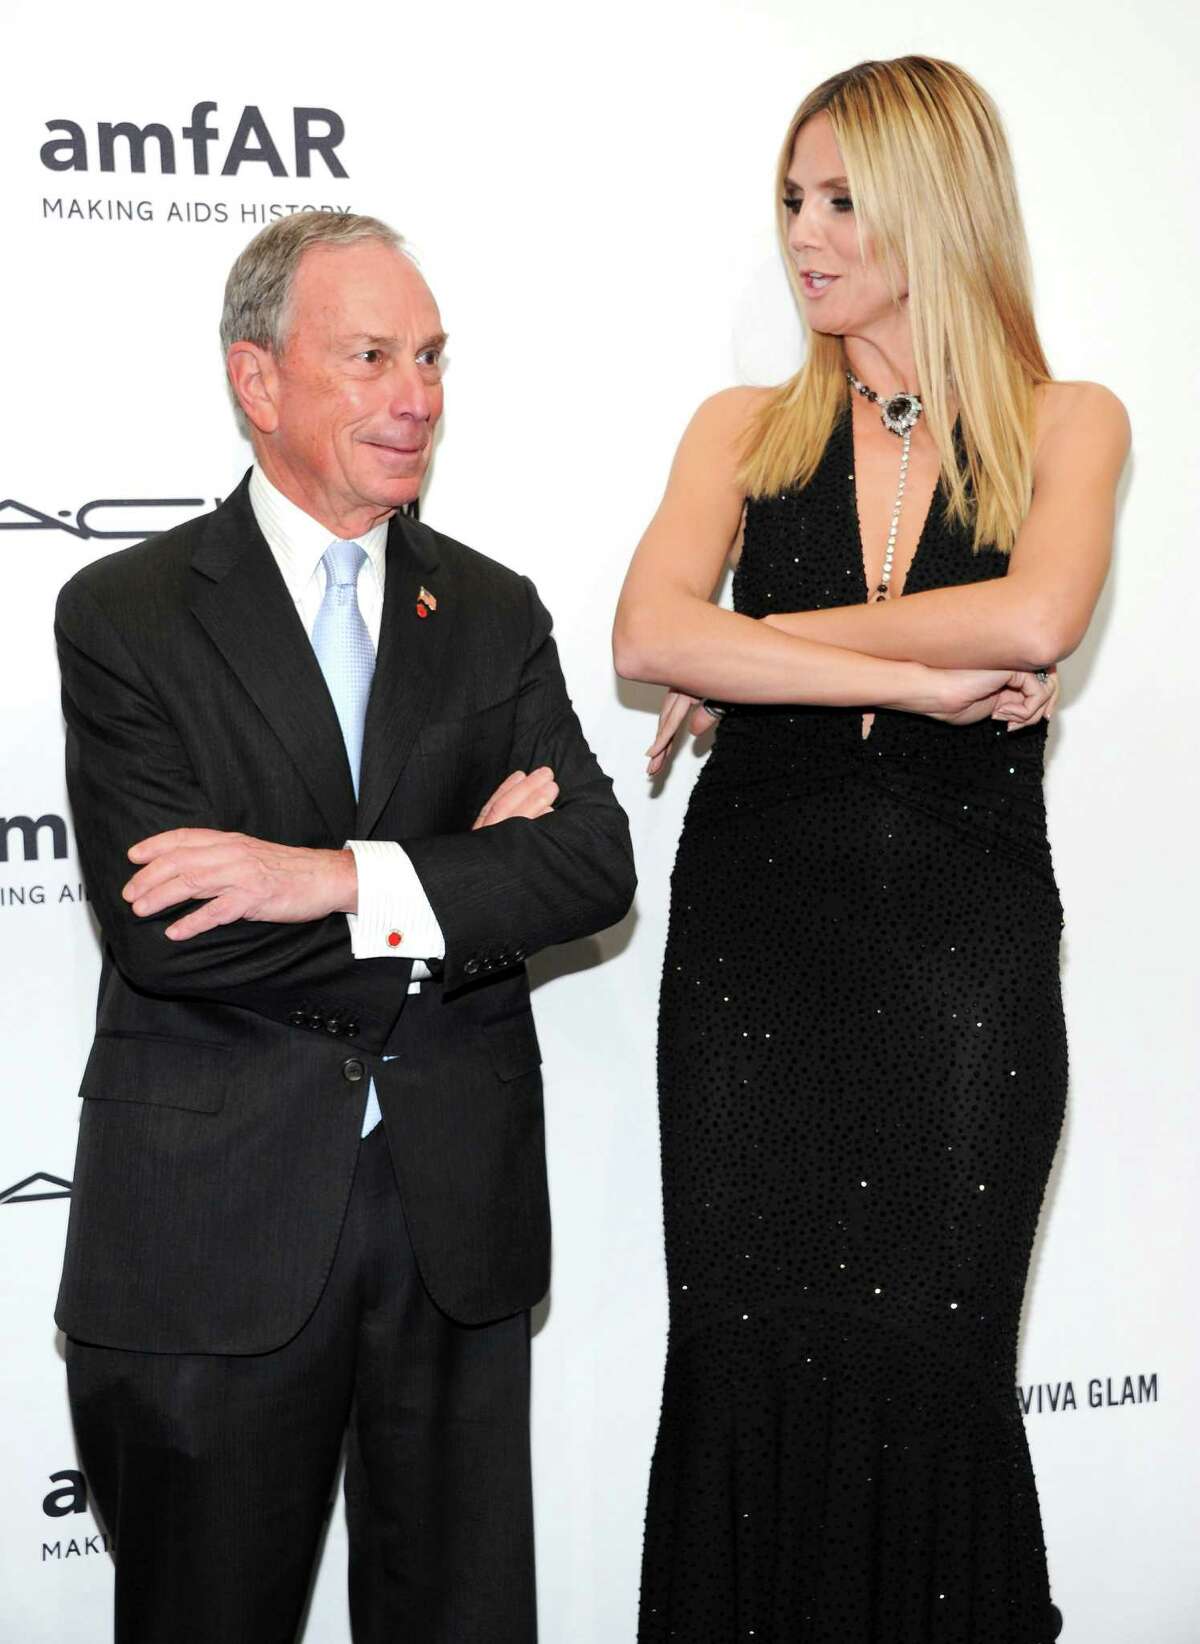 New York Mayor Michael Bloomberg and honoree Heidi Klum attend amfAR's New York gala at Cipriani Wall Street on Wednesday, Feb. 6, 2013 in New York.